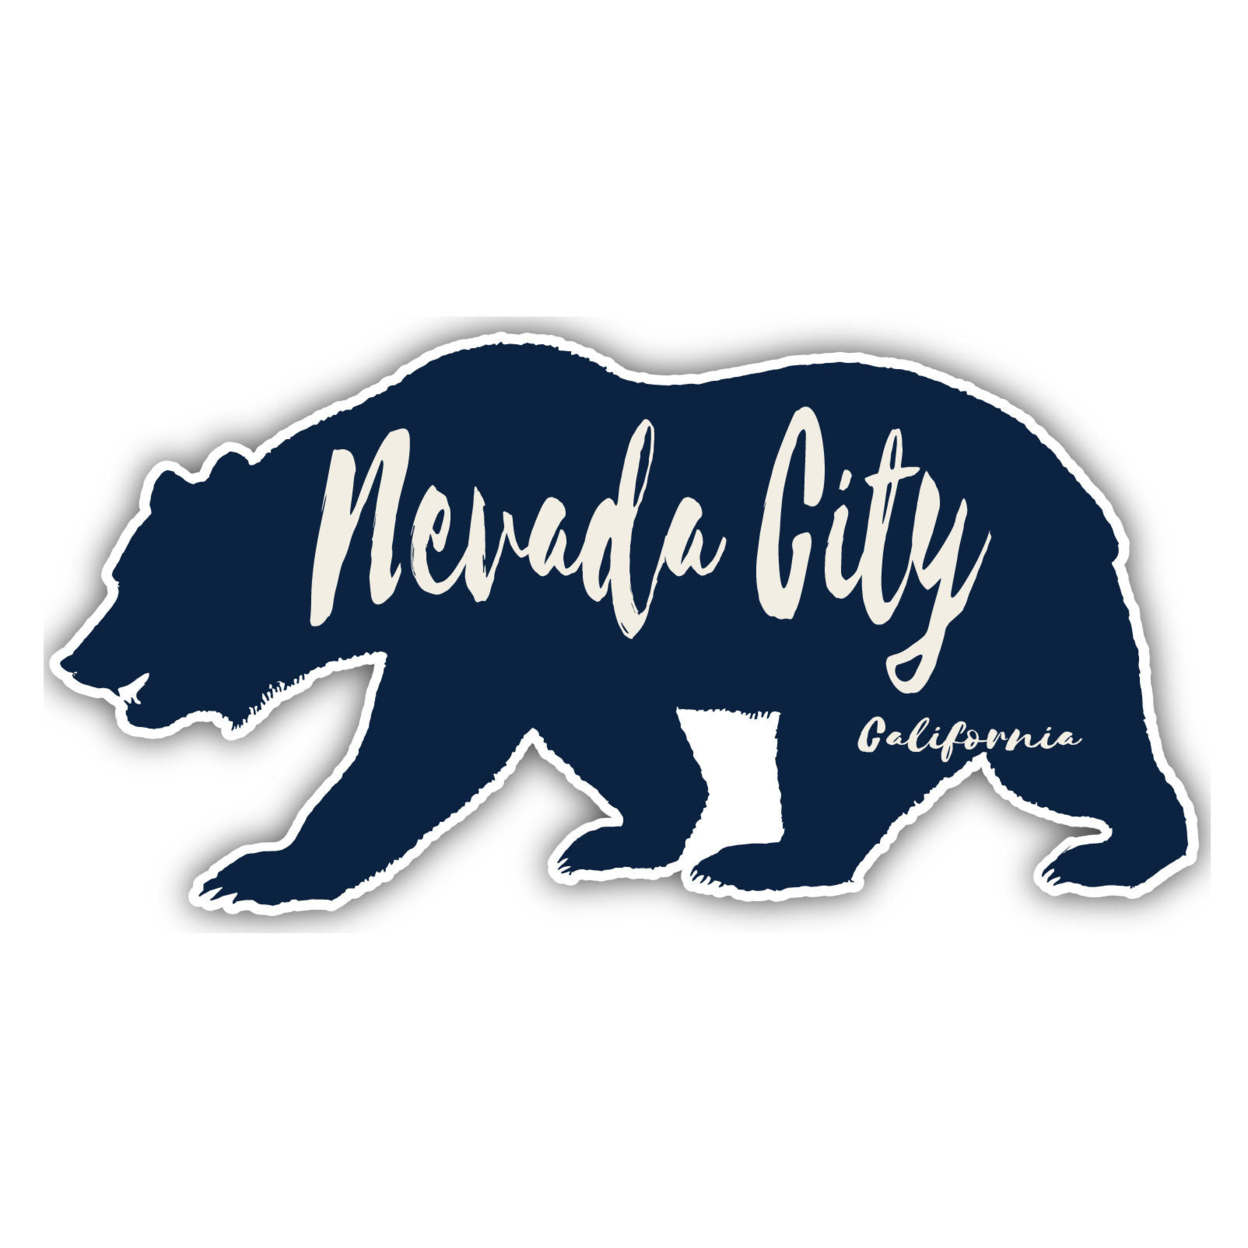 Nevada City California Souvenir Decorative Stickers (Choose Theme And Size) - Single Unit, 4-Inch, Tent